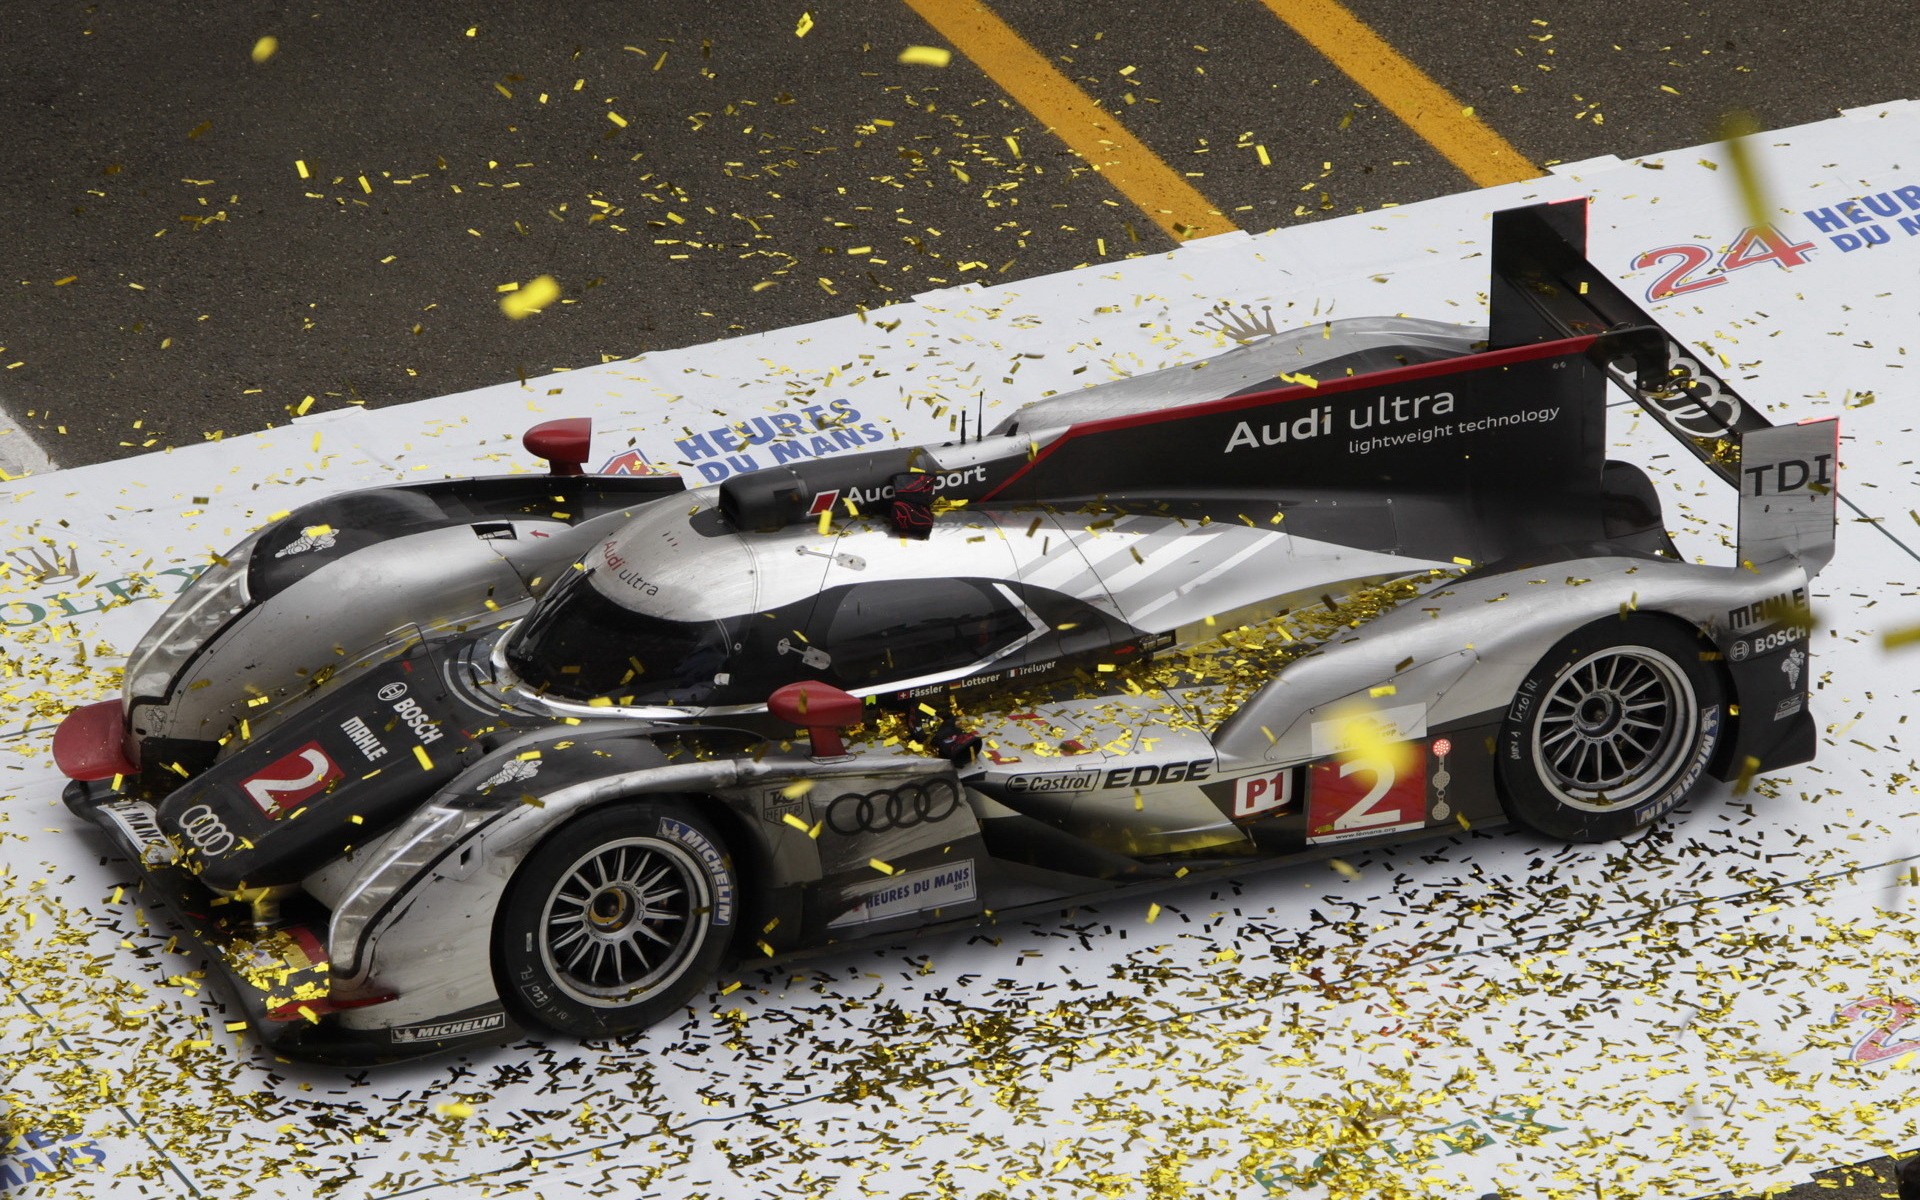 The Audi Le Mans Win Wallpaper iPhone